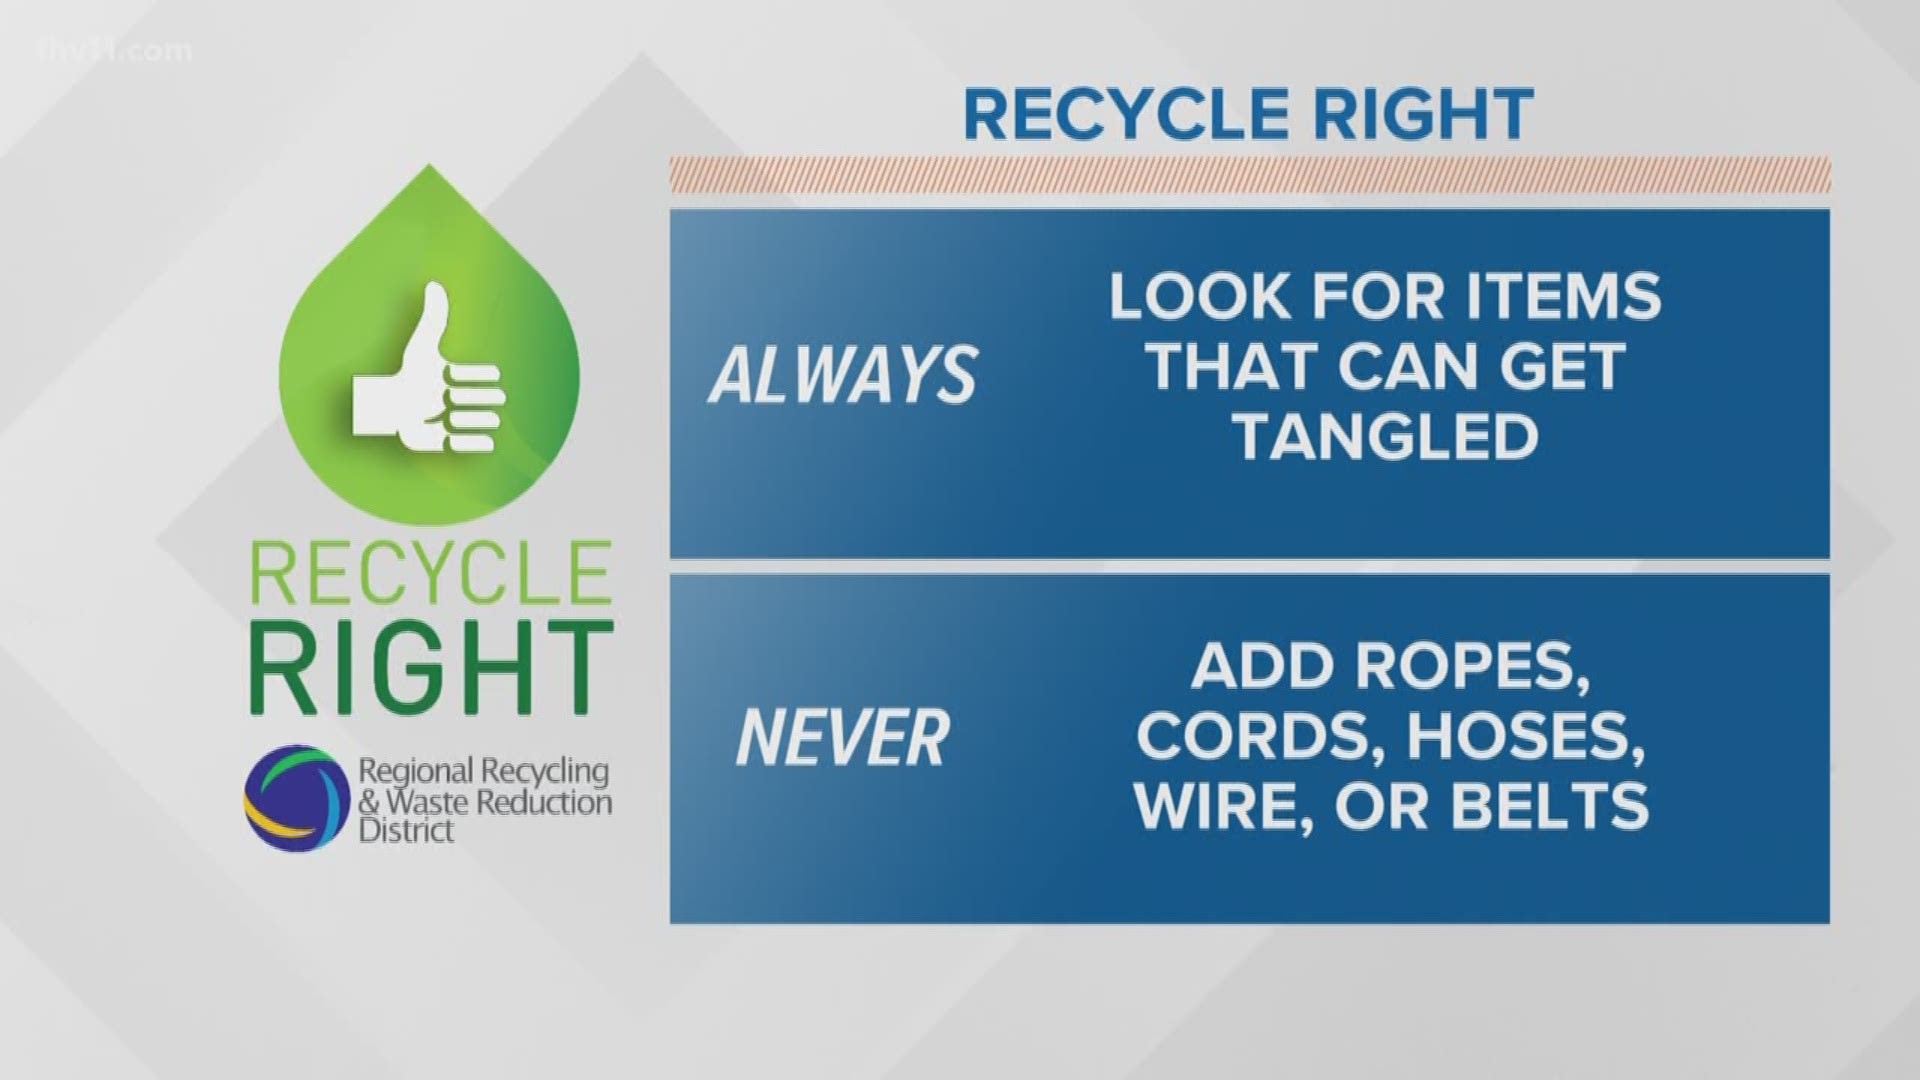 Meteorologist Mariel Ruiz has your recycle right tip for week 21.